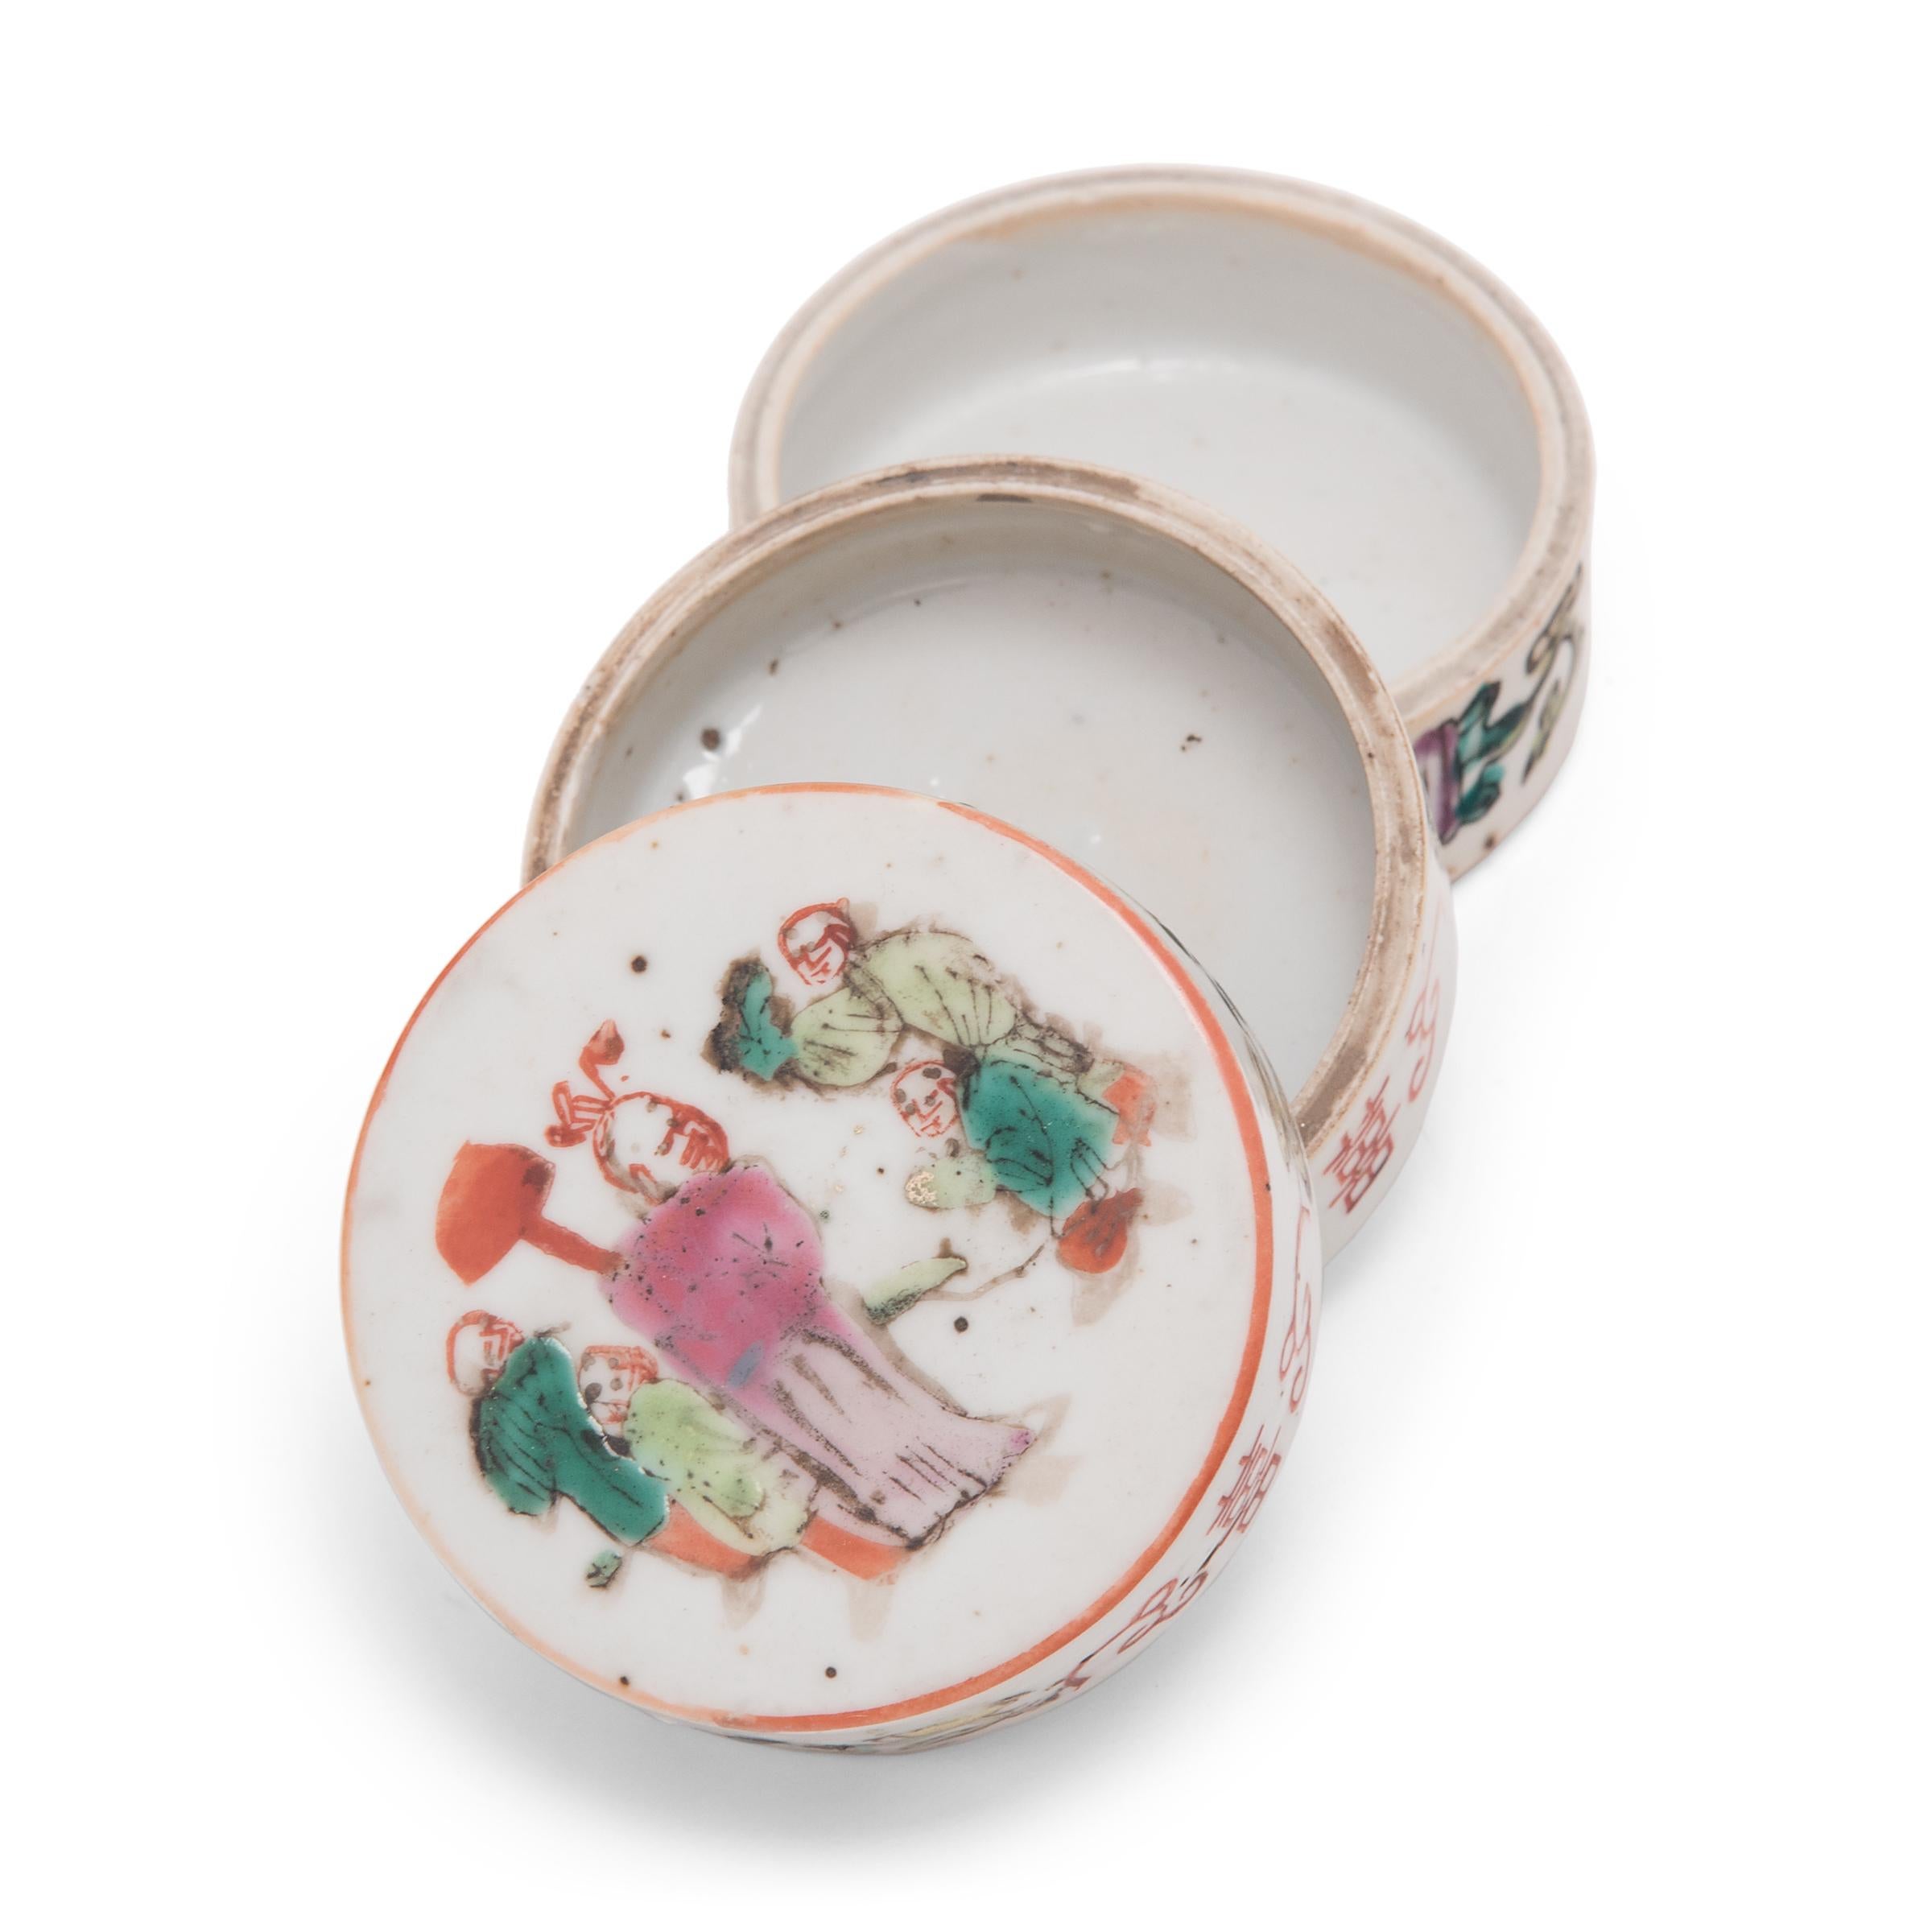 Enameled Chinese Porcelain Stacking Box with Scholarly Gathering, c. 1900